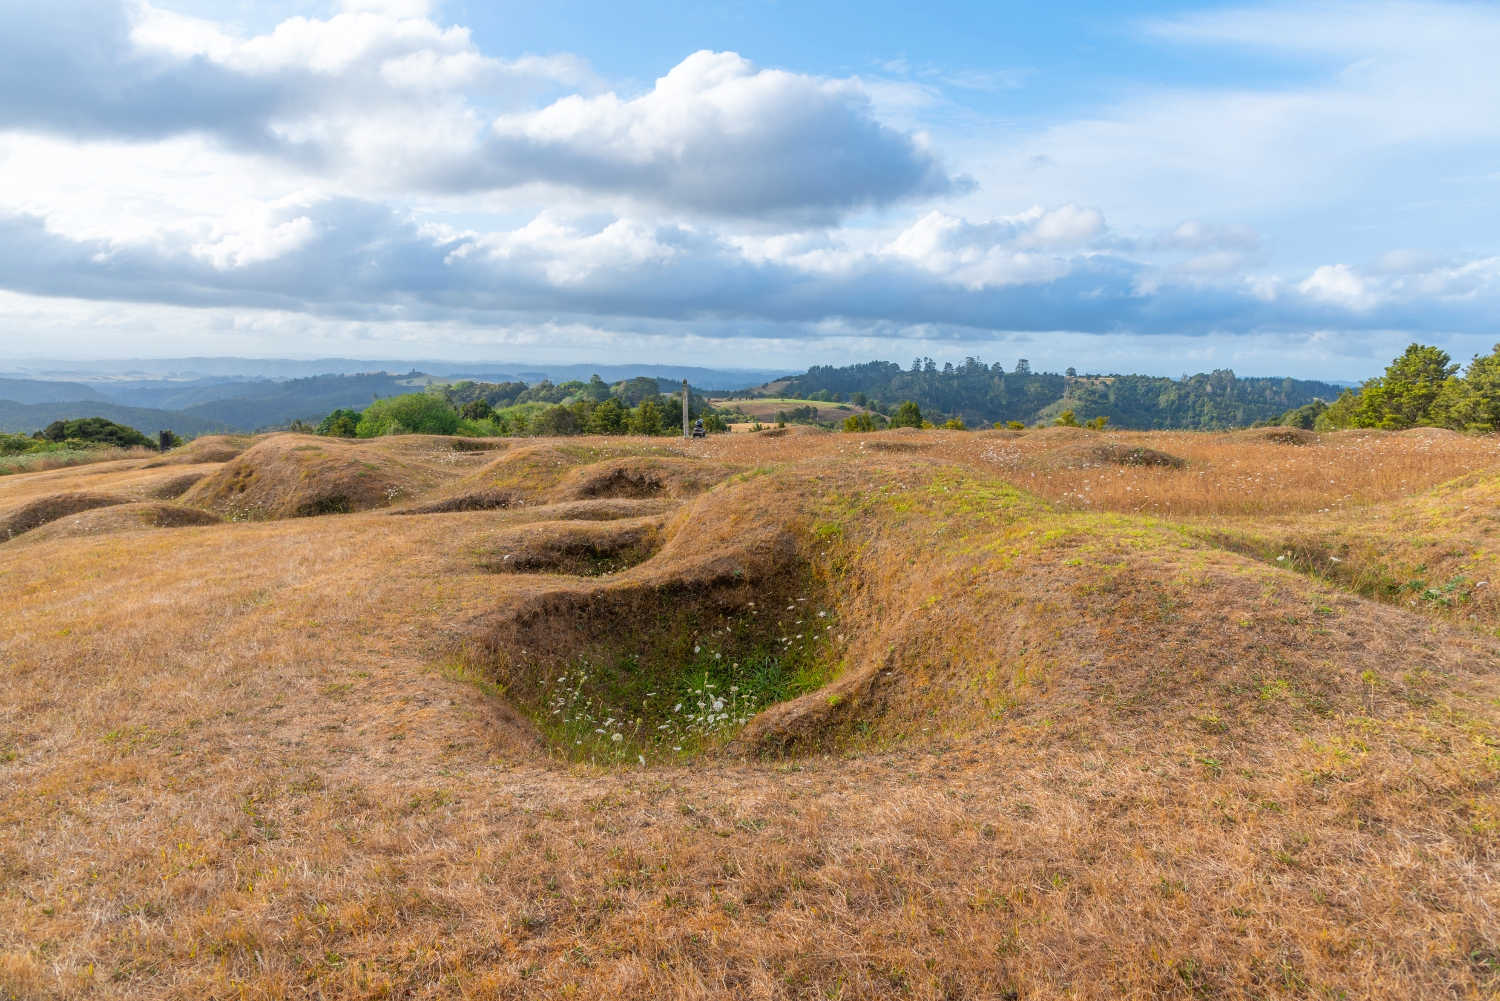 Ruapekapeka pa - ruins of a maori fortress in New Zealand